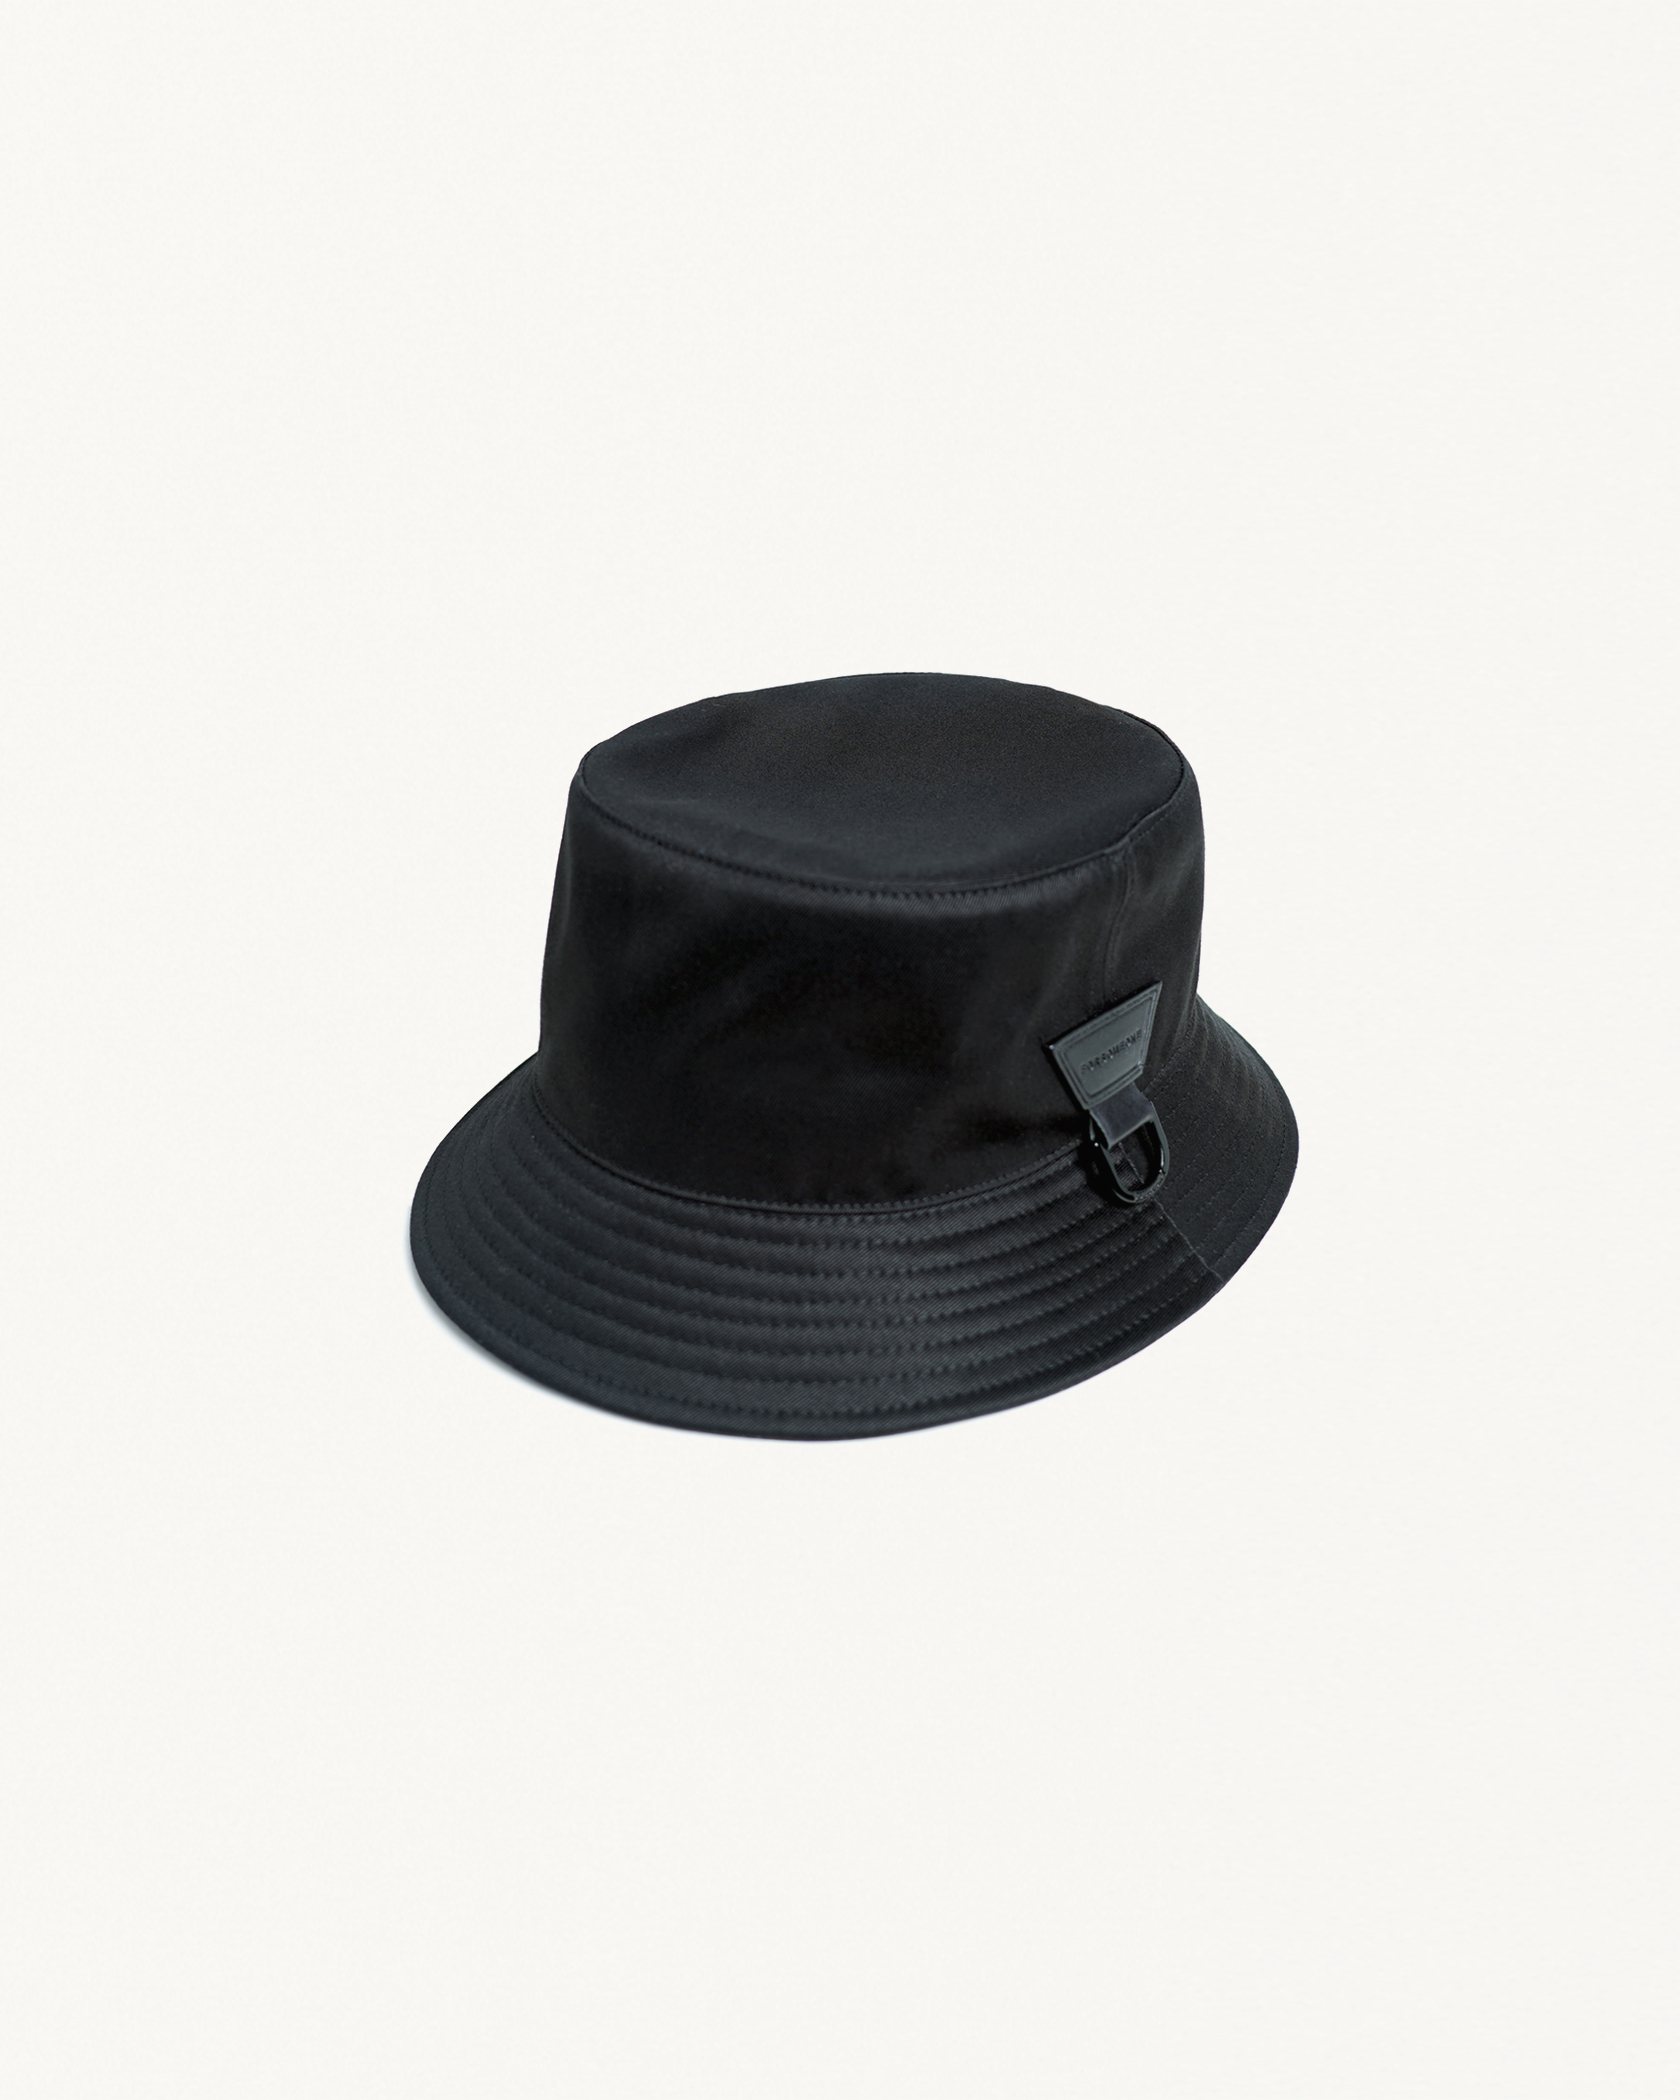 COTTON MOUNT HAT 2.0 詳細画像 Black x Black 2